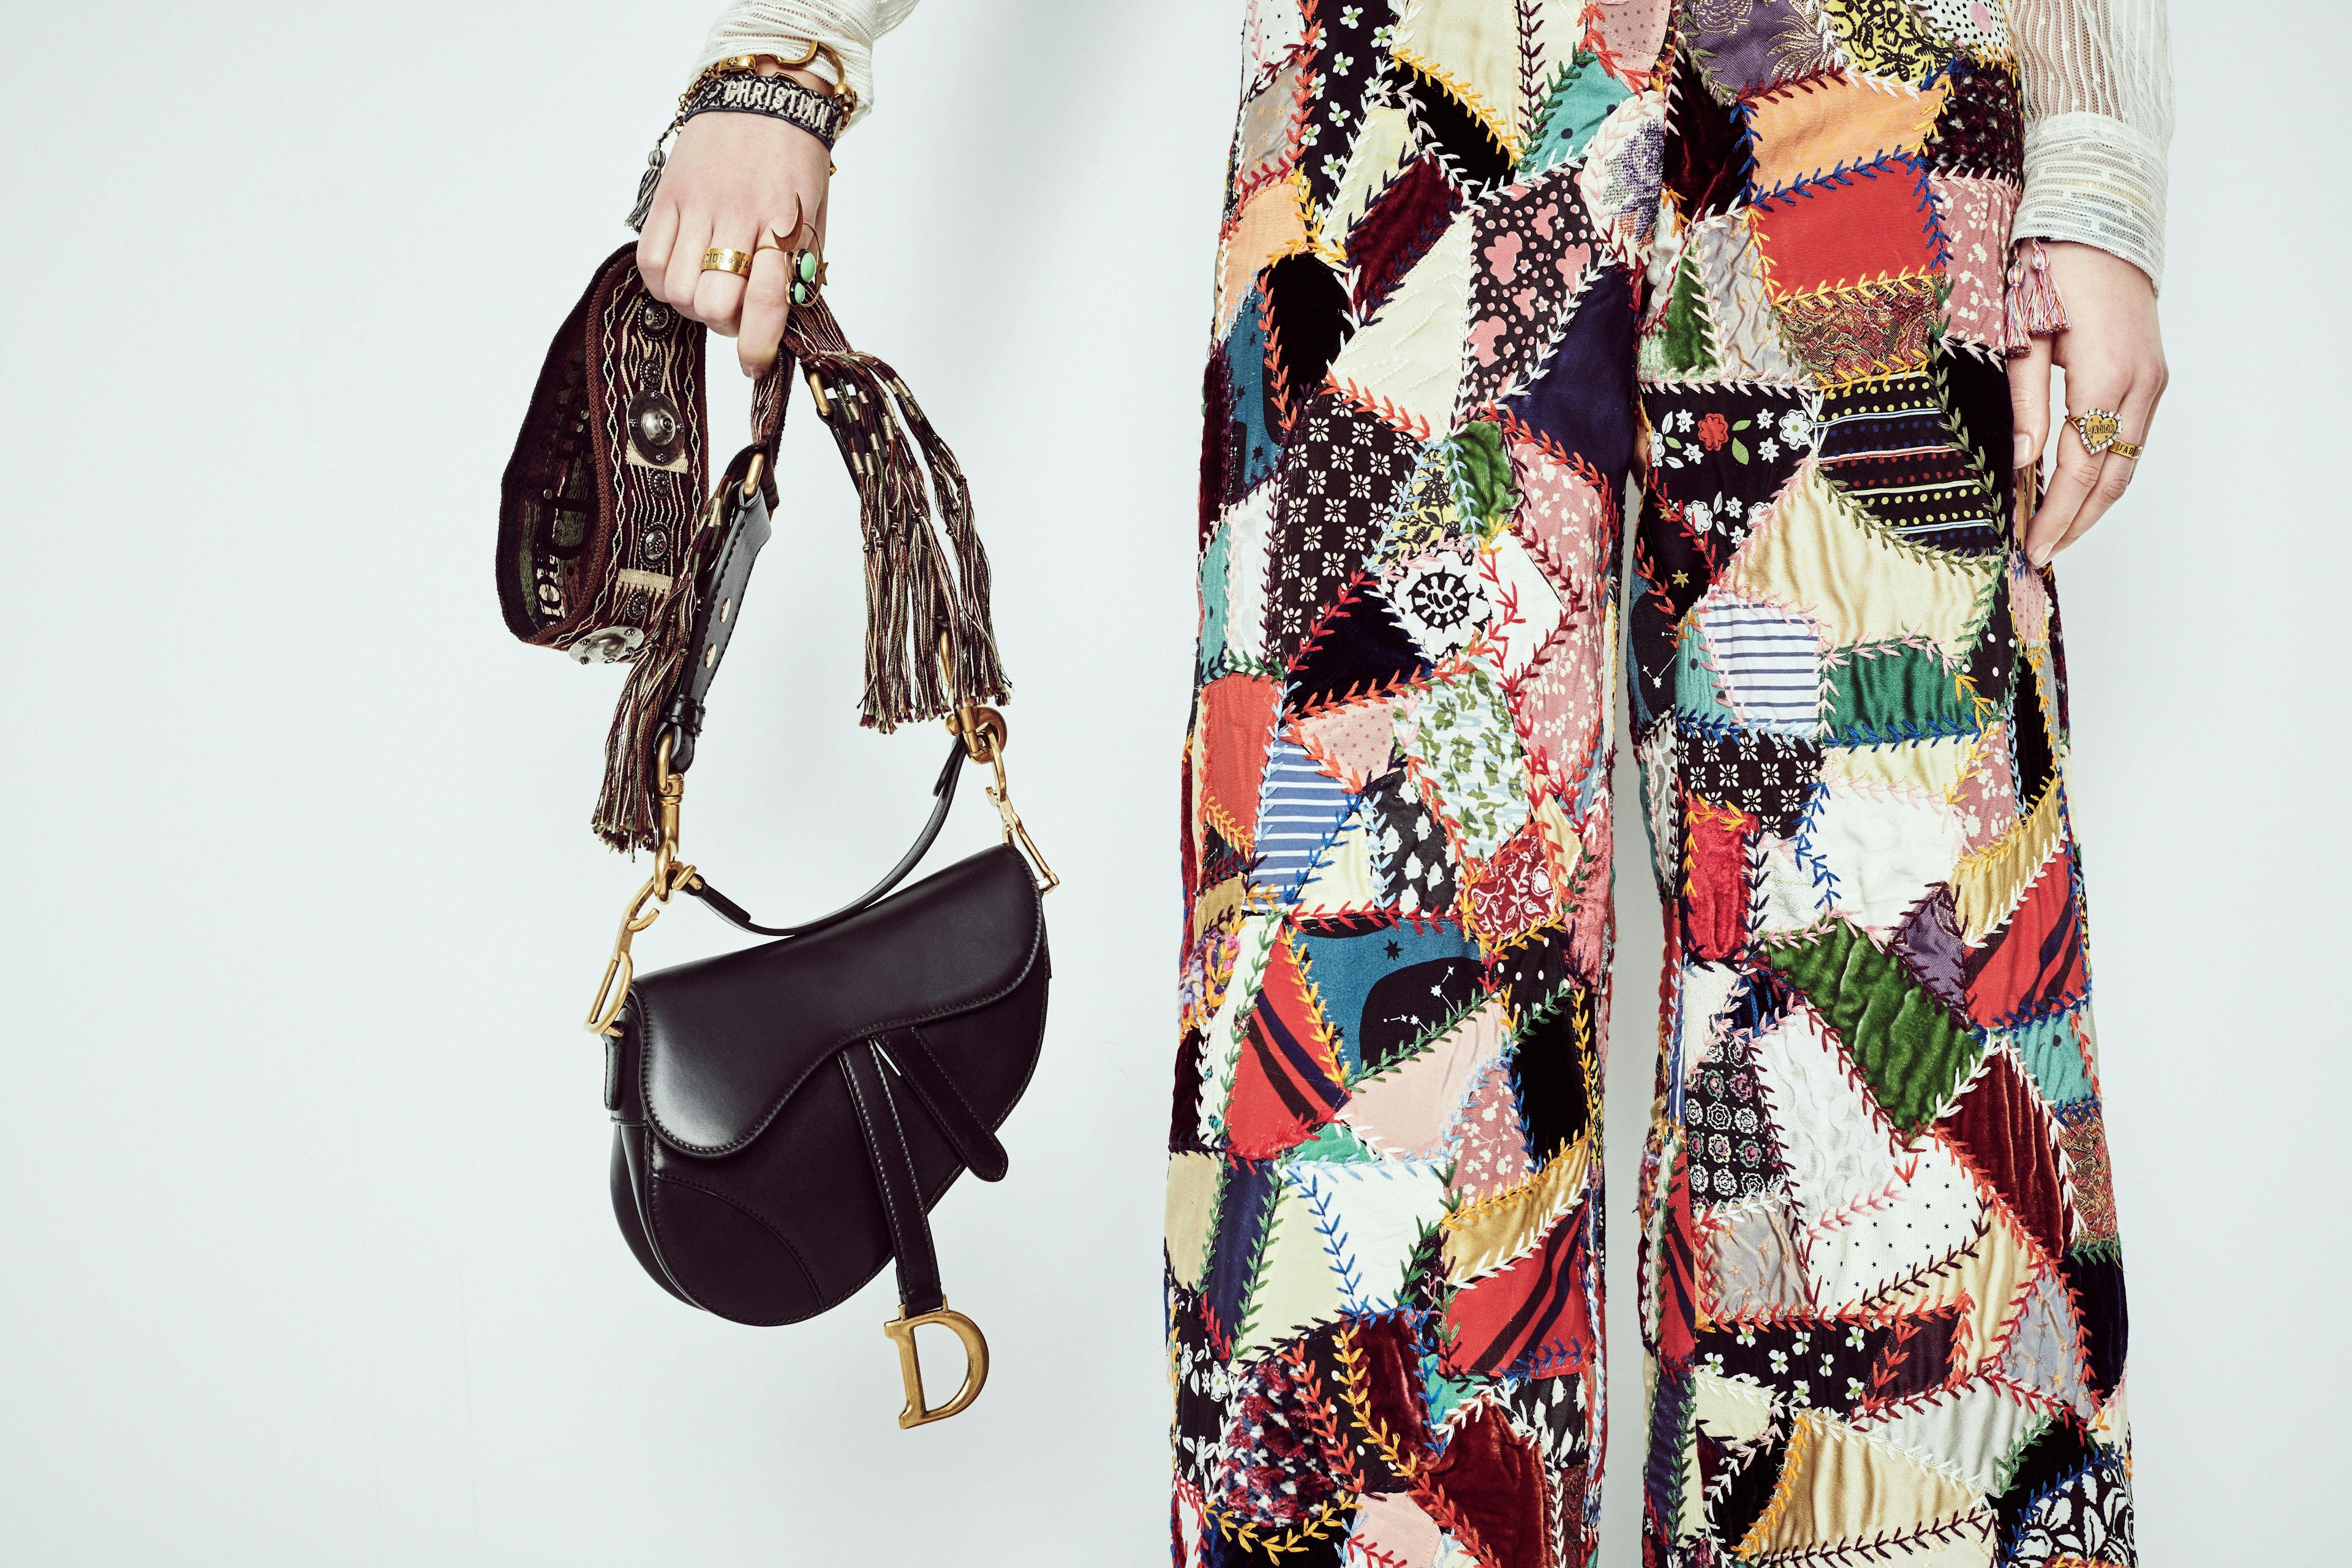 clothing apparel handbag accessories bag accessory purse